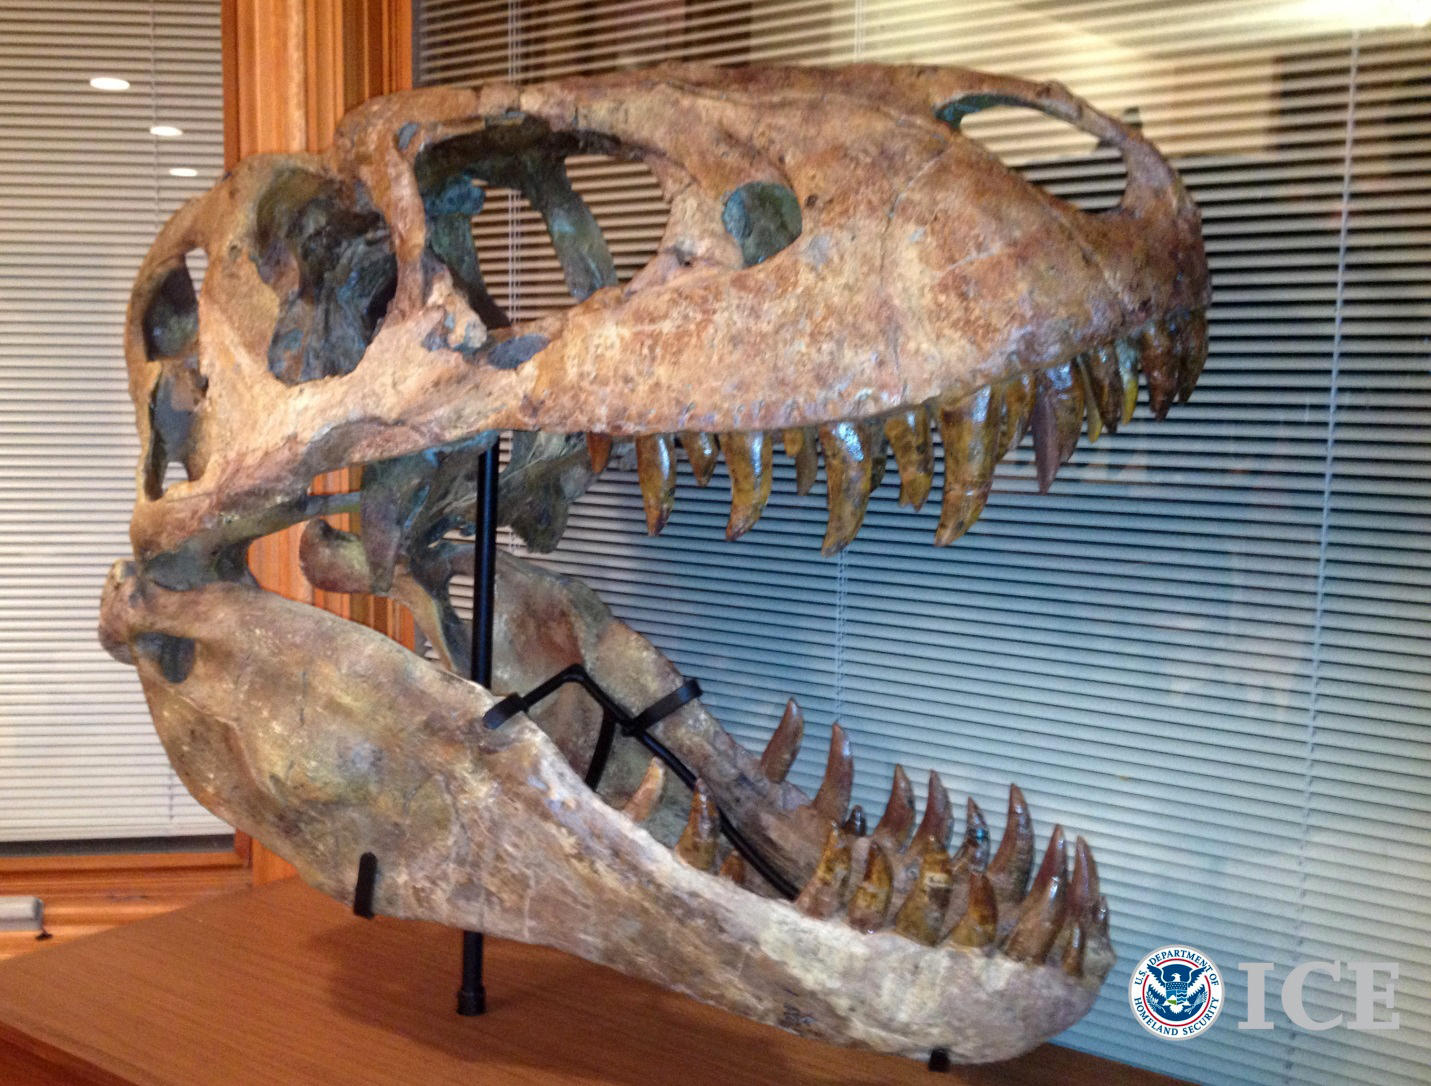 This Tyrannosaurus bataar skull was seized in the US. Photo: AP